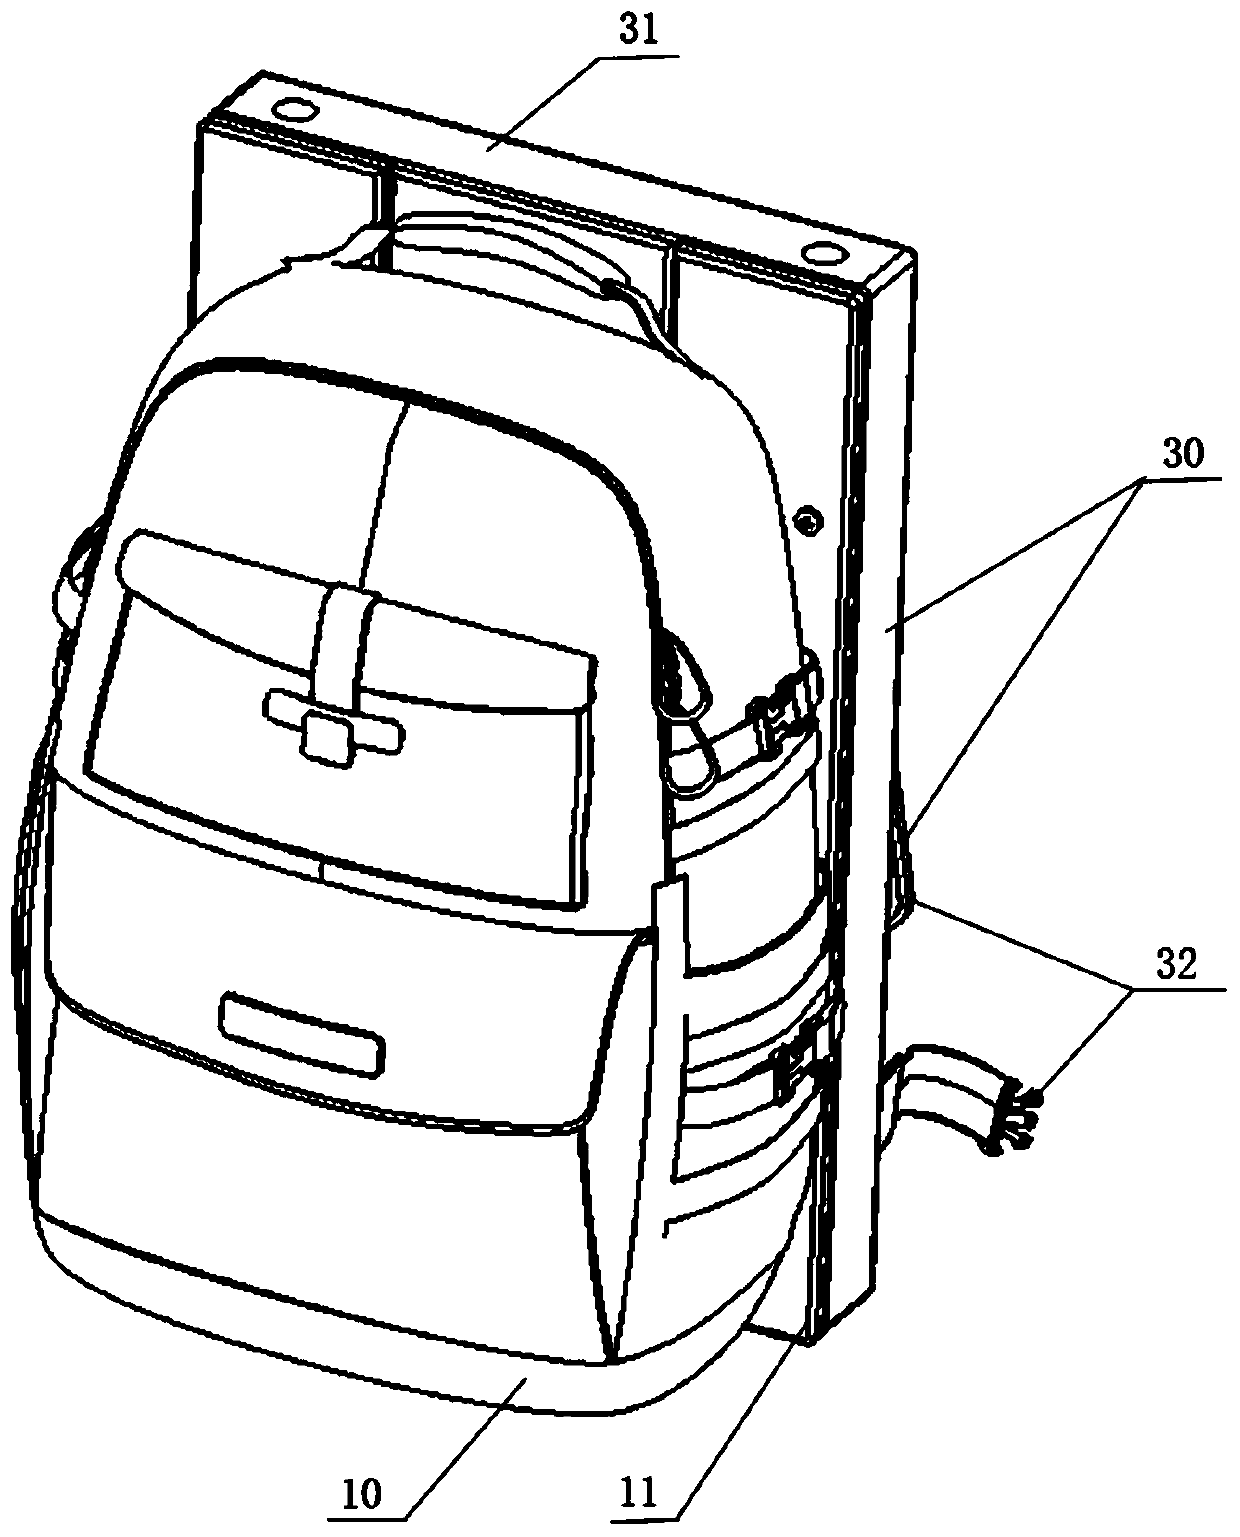 Vibration power generation backpack